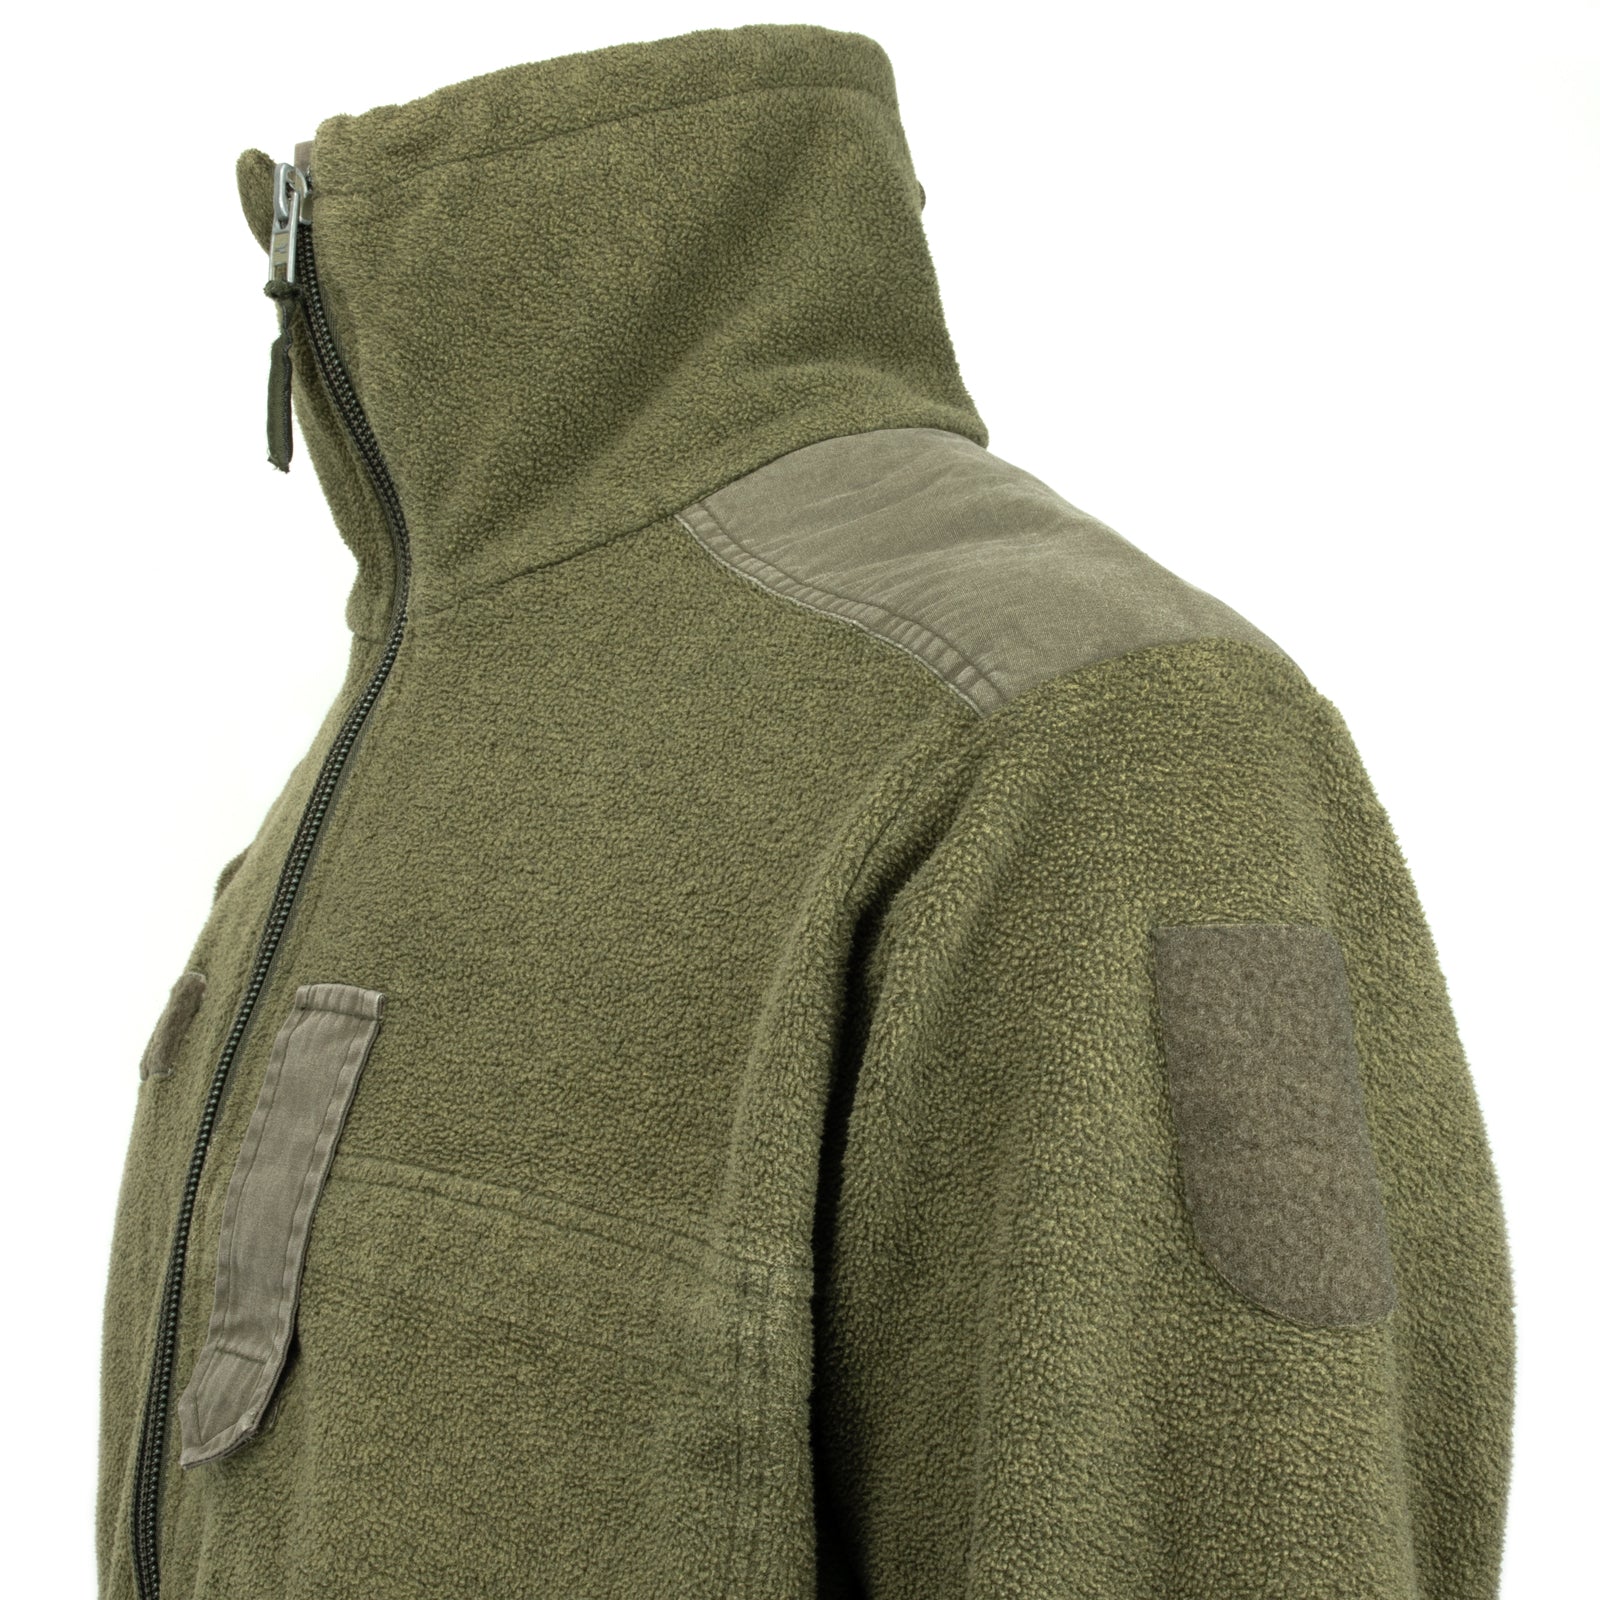 Austrian Army Fleece Jacket